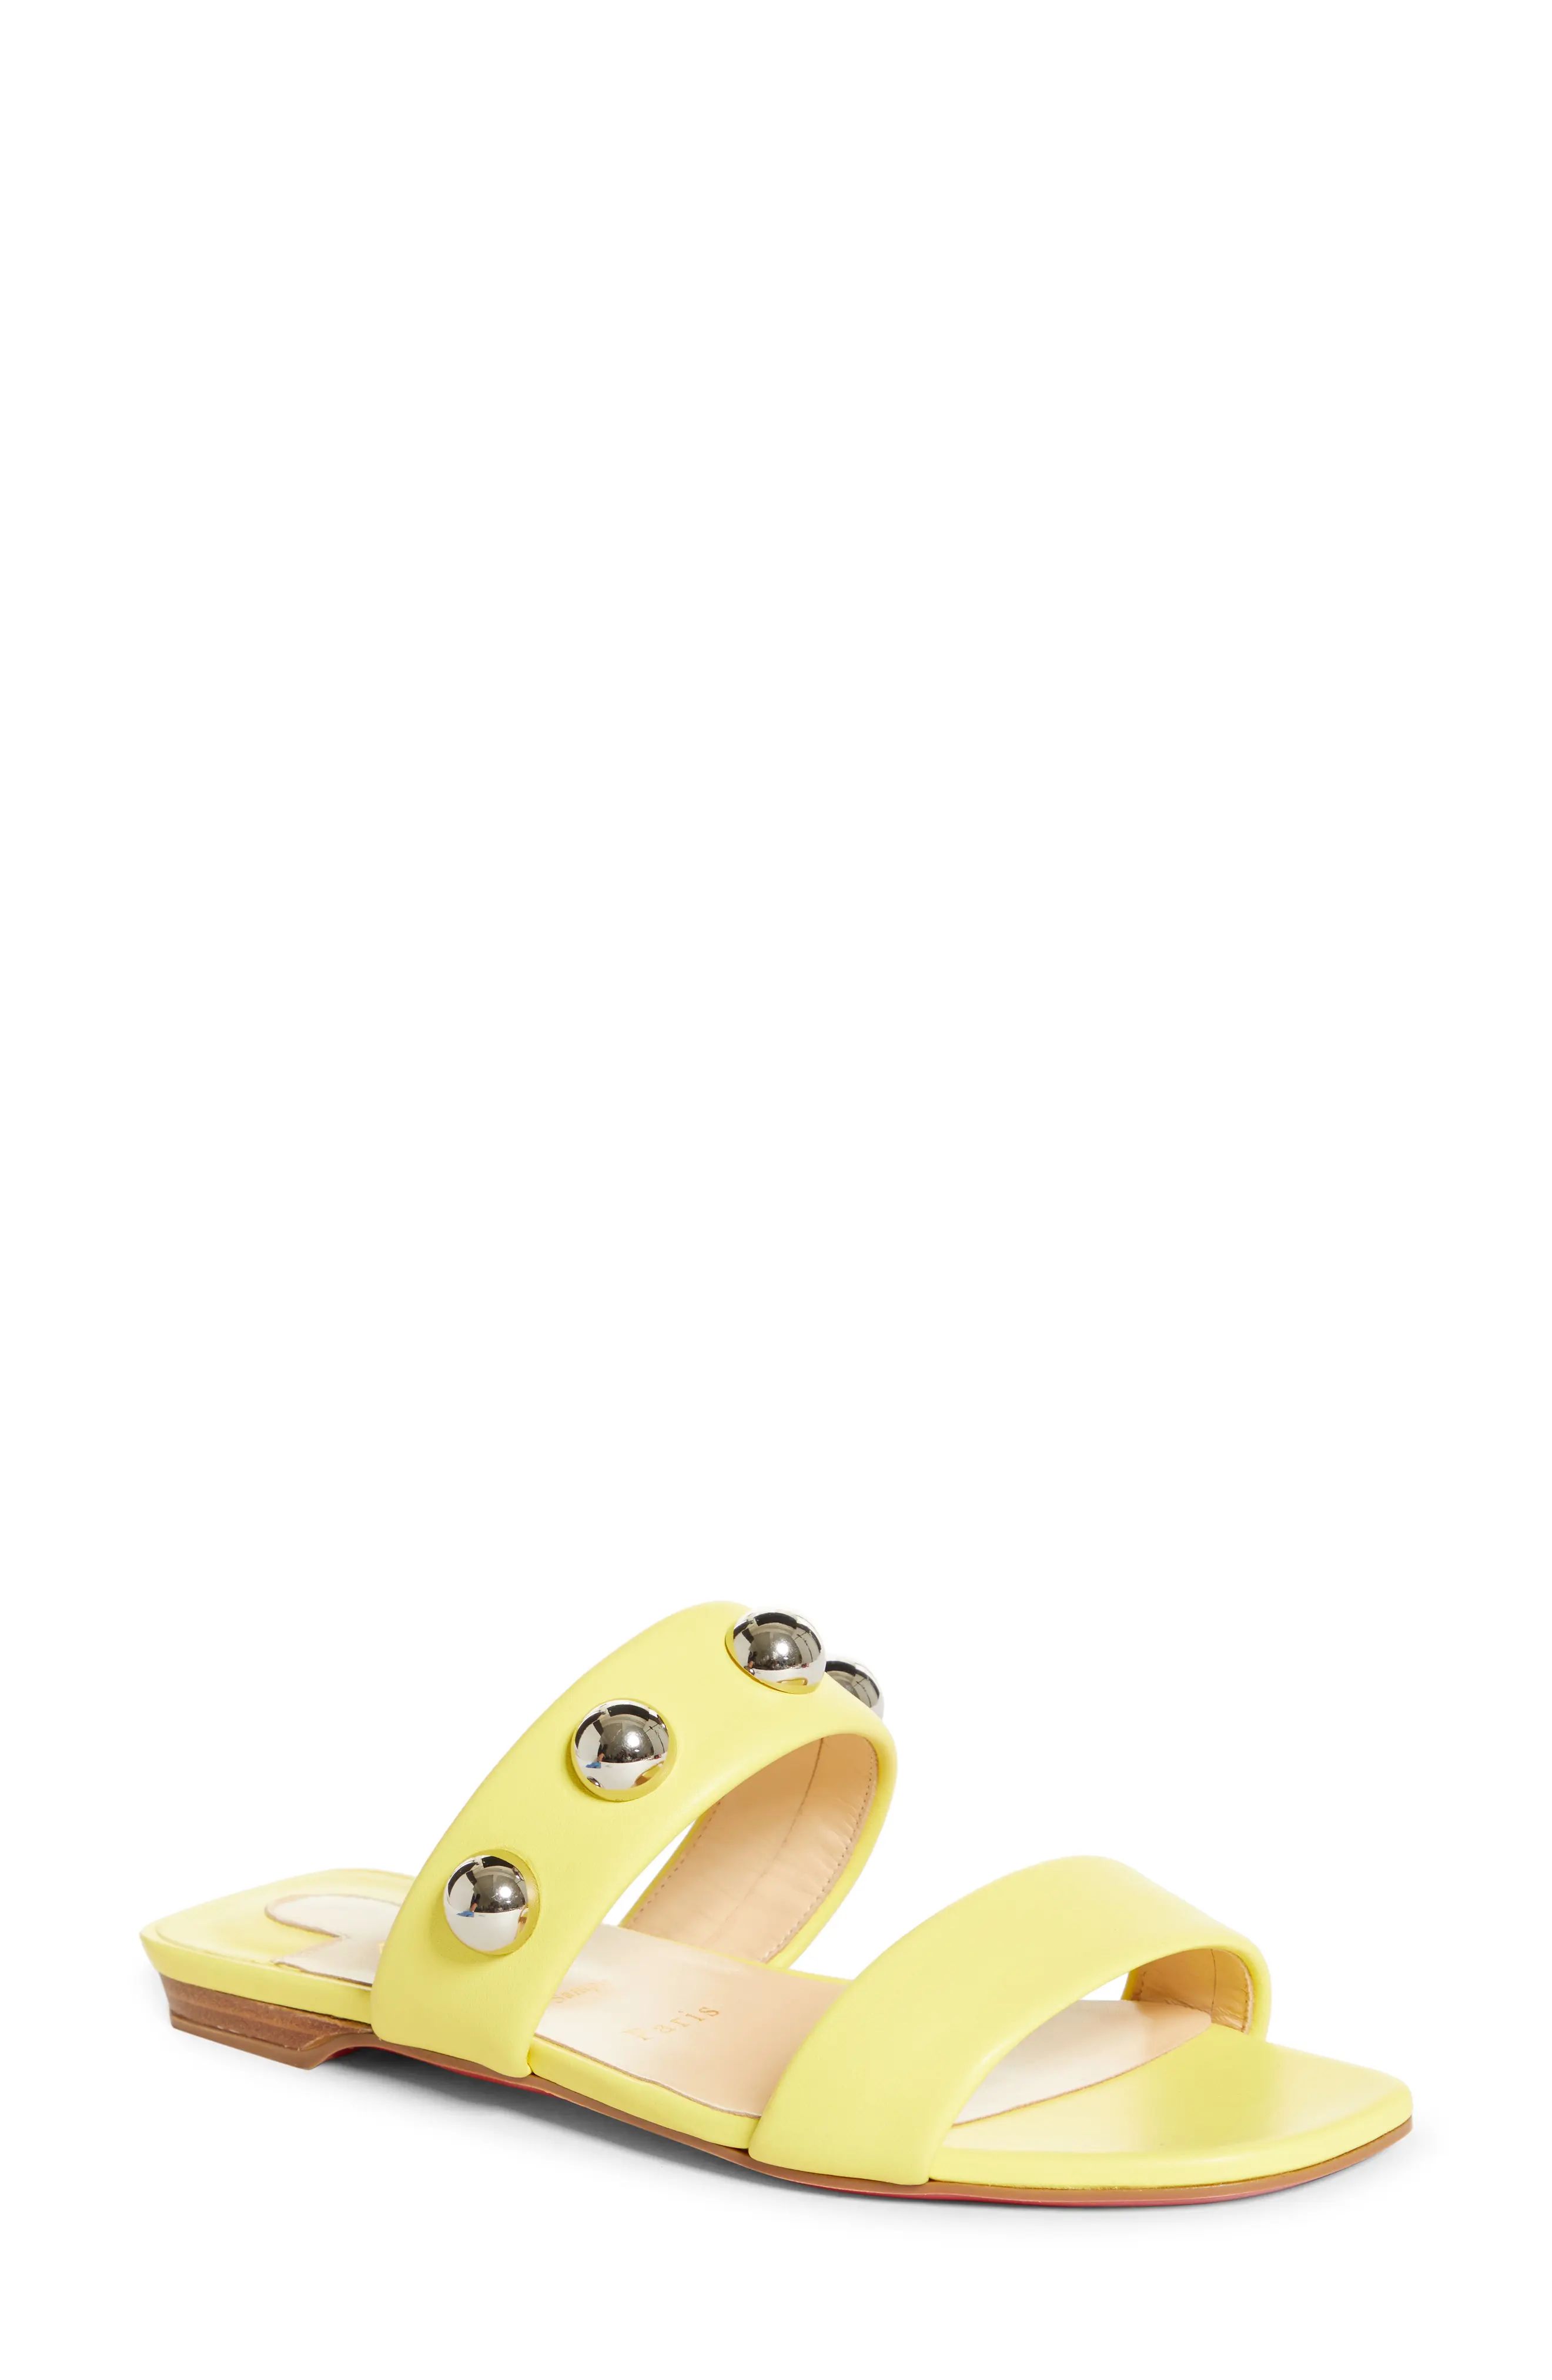 Women's Christian Louboutin Simple Bille Slide Sandal, Size 6.5US - Yellow | Nordstrom